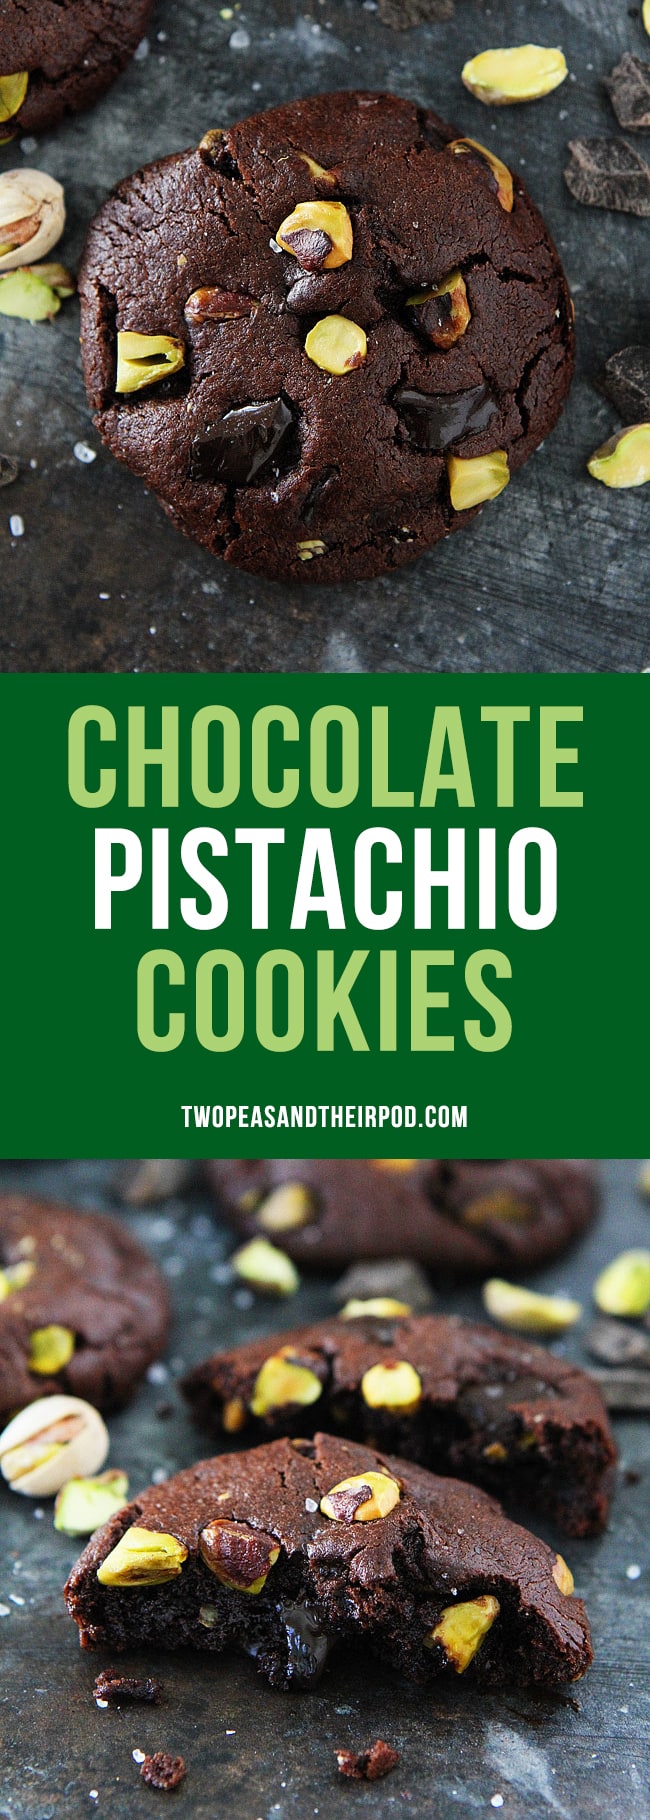 Chocolate Pistachio Cookies-rich chocolate cookies with pistachios, chocolate chunks, and sea salt! #cookies #chocolate #pistachio #Christmascookie